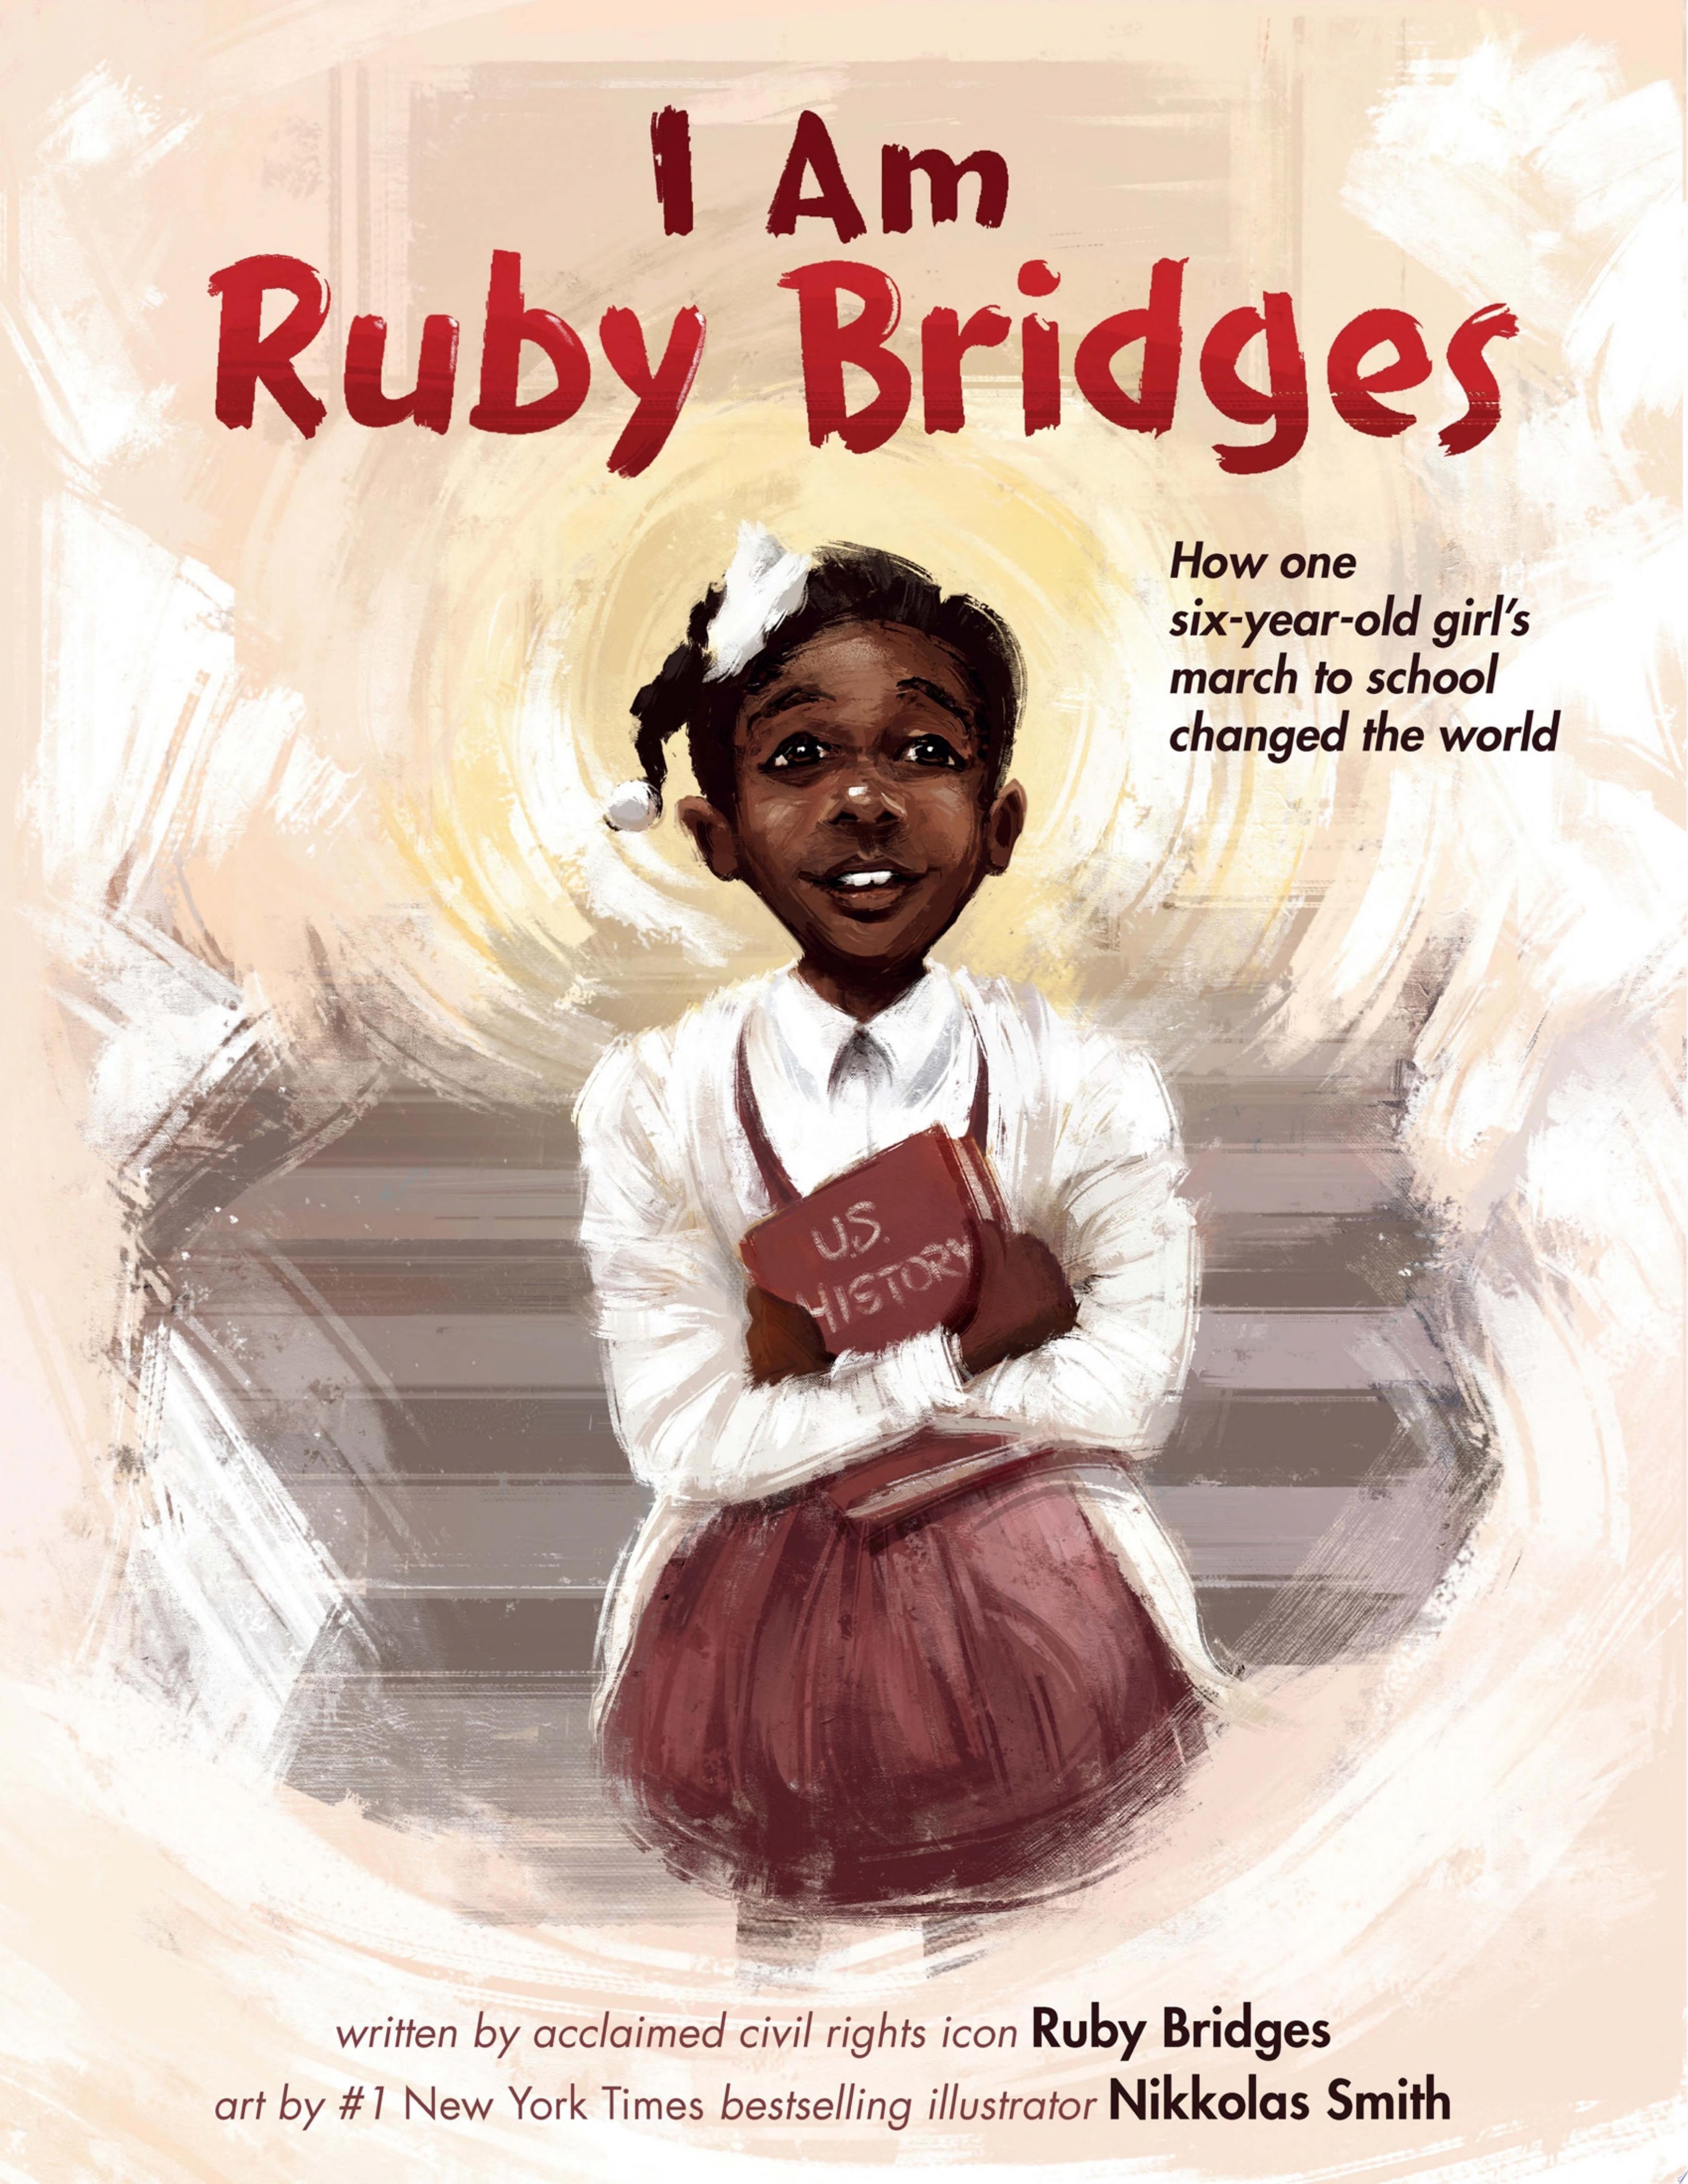 Image for "I Am Ruby Bridges"